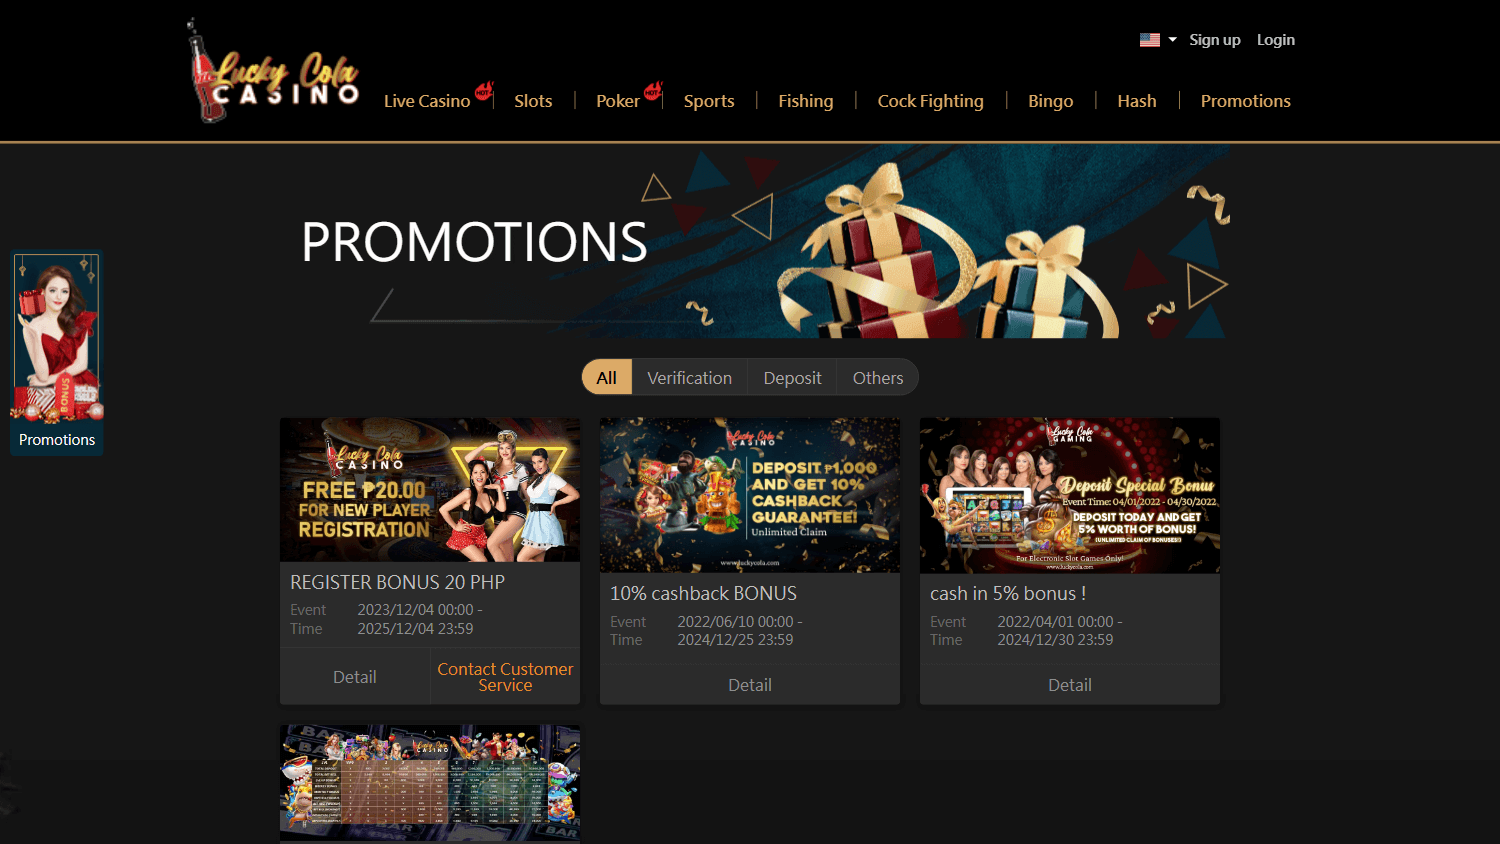 luckycola_casino_promotions_desktop